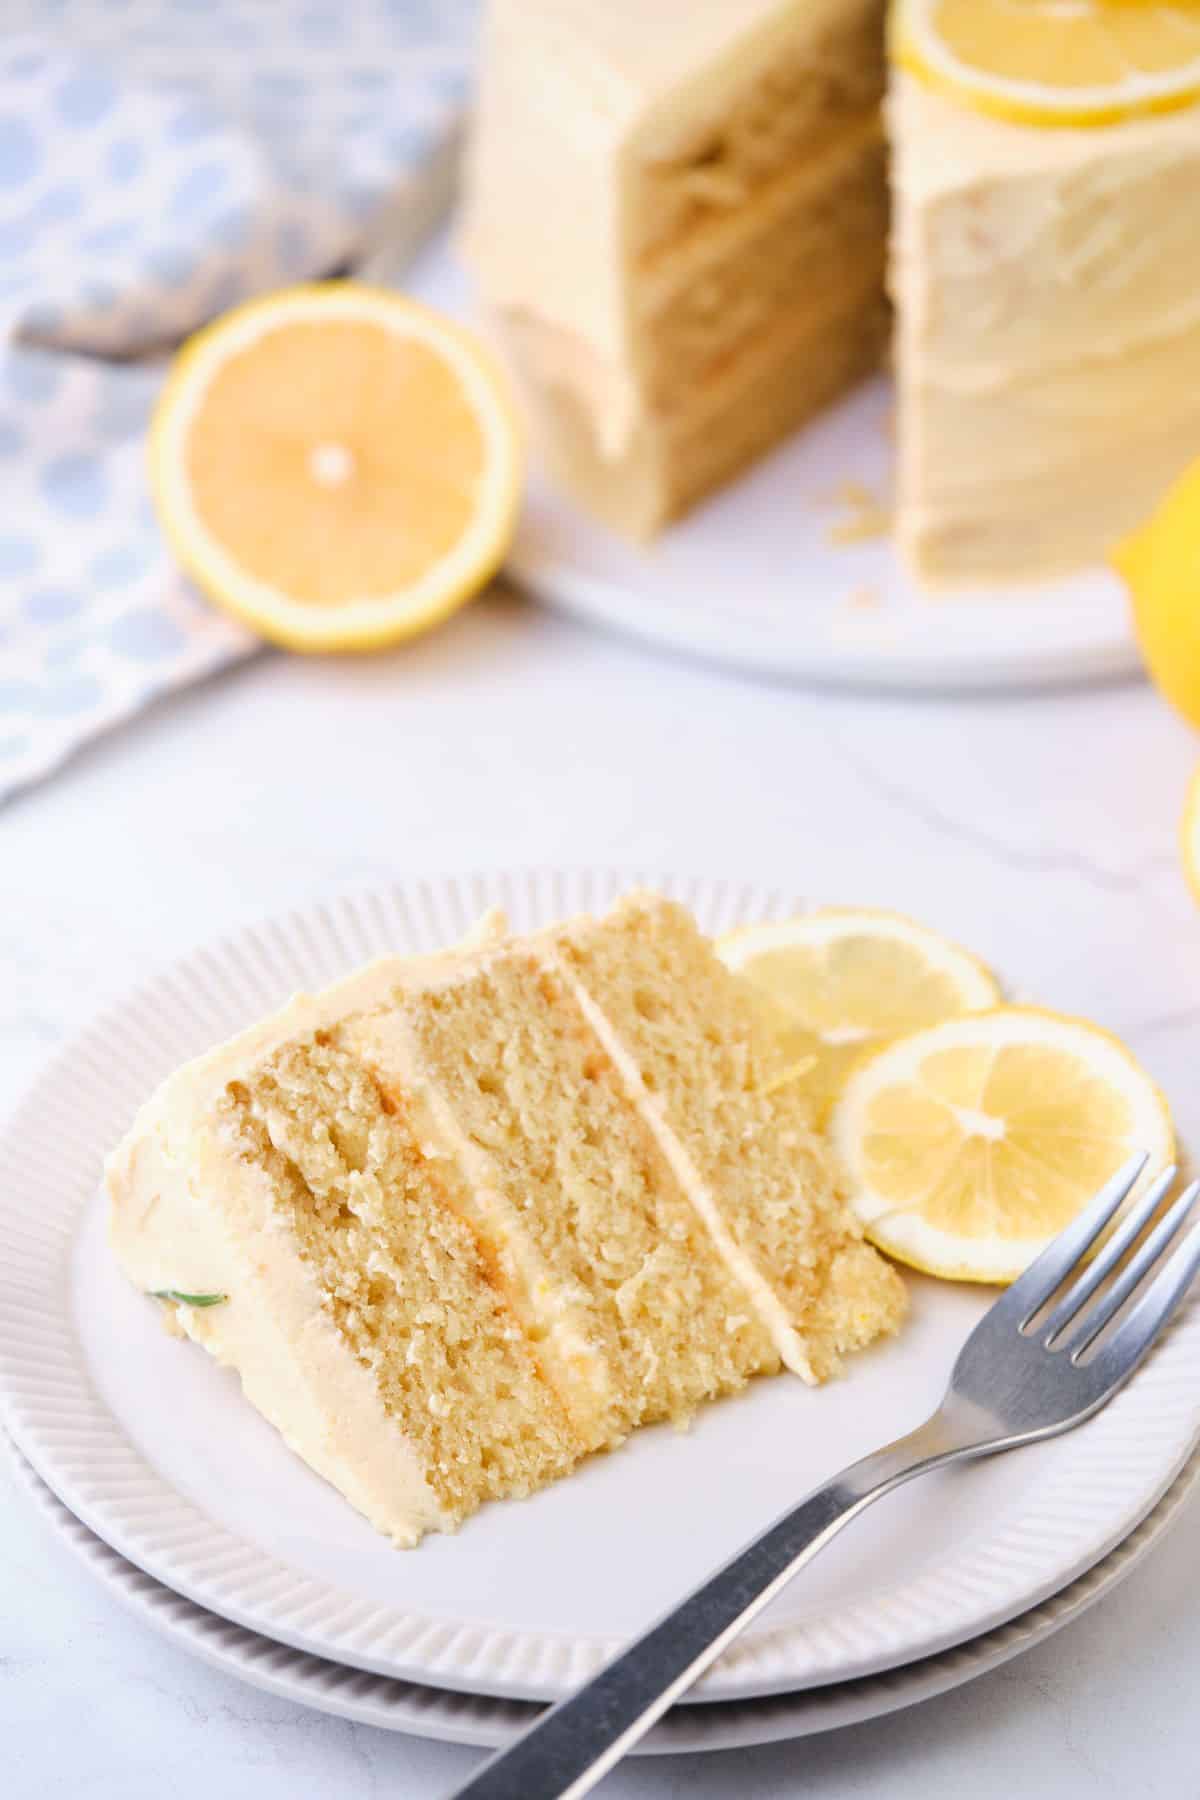 A soft and moist slice of lemon cake with lemon curd filling.